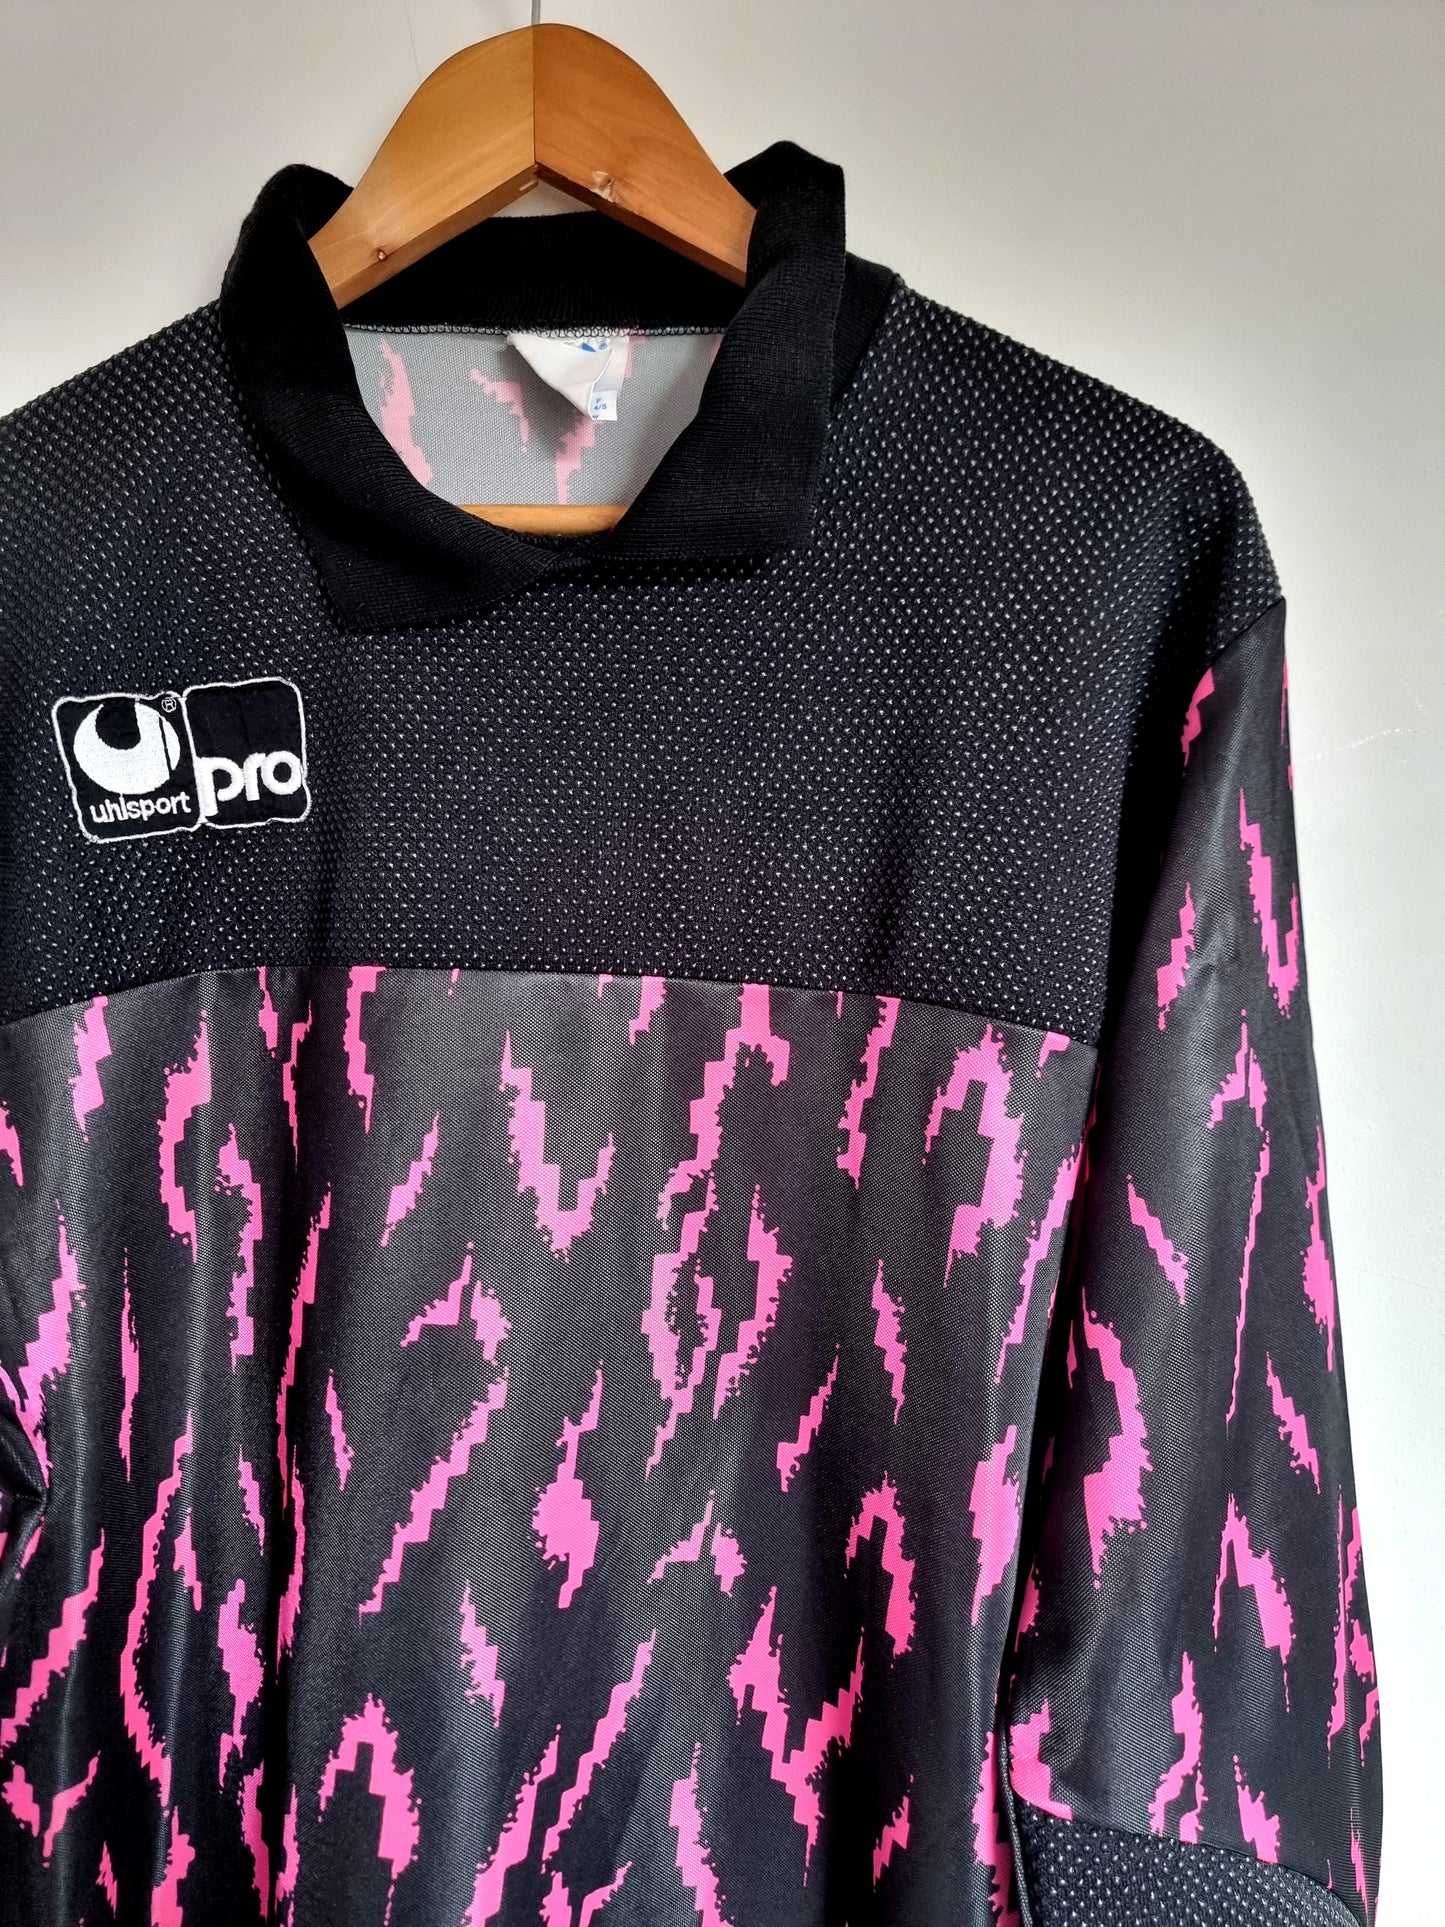 Uhlsport 80s Long Sleeve Goalkeeper Template Shirt Large